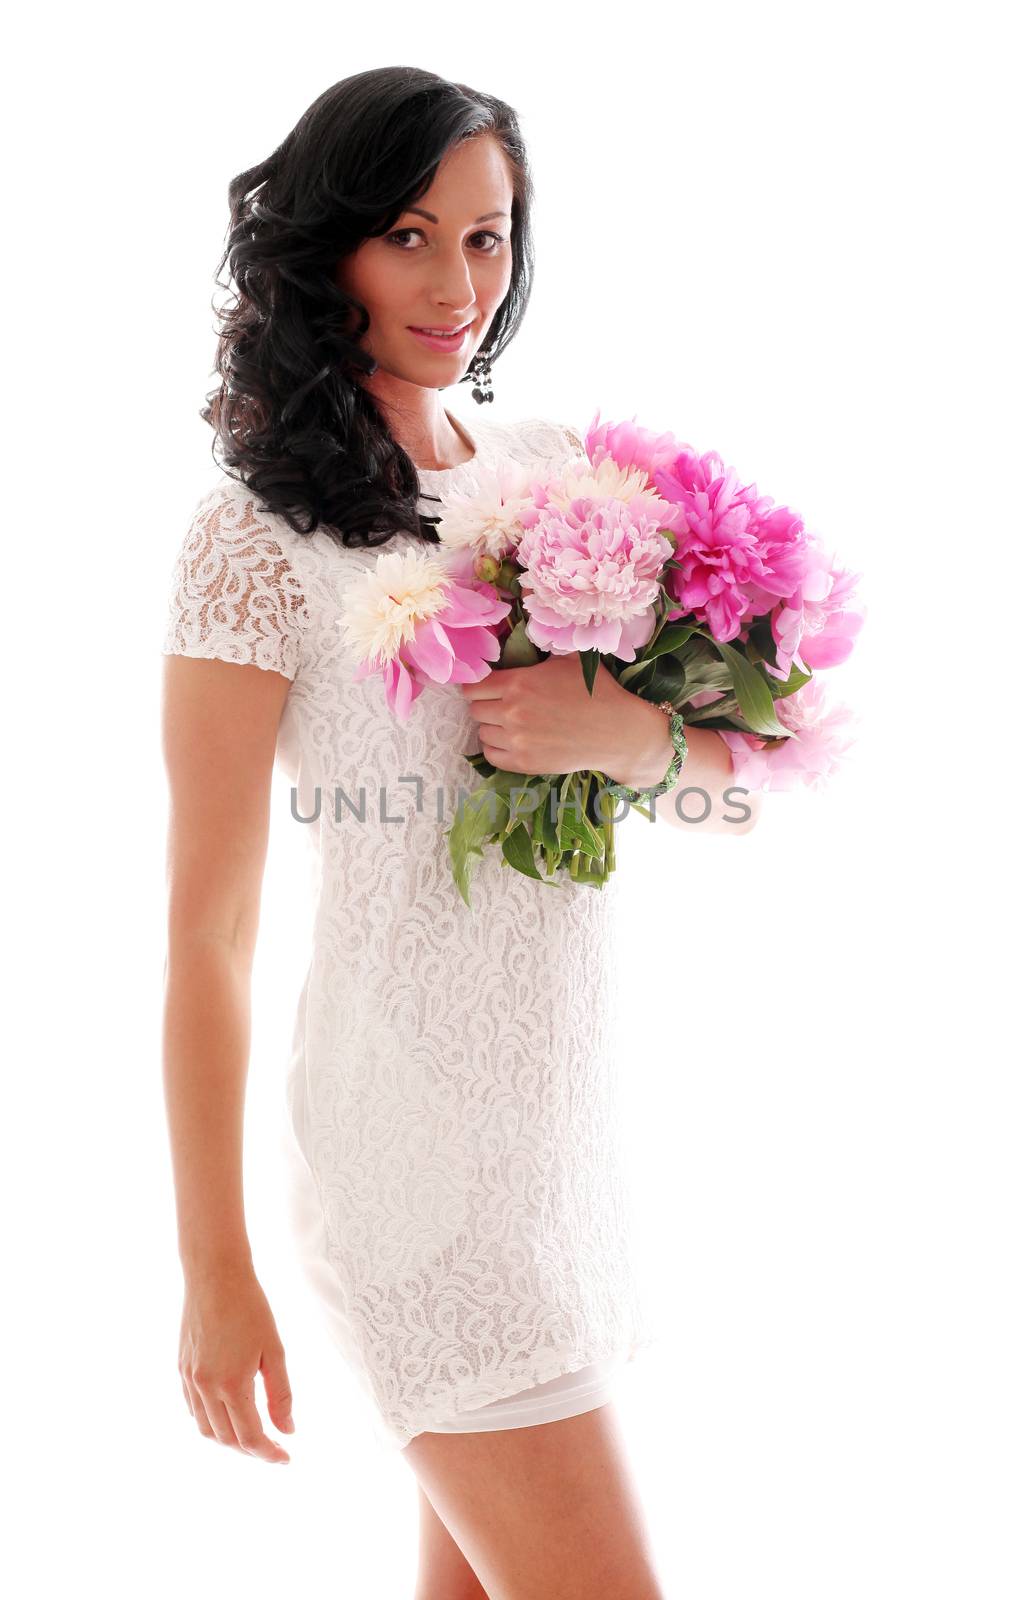 Beautiful woman with bouquet of peonies by rufatjumali